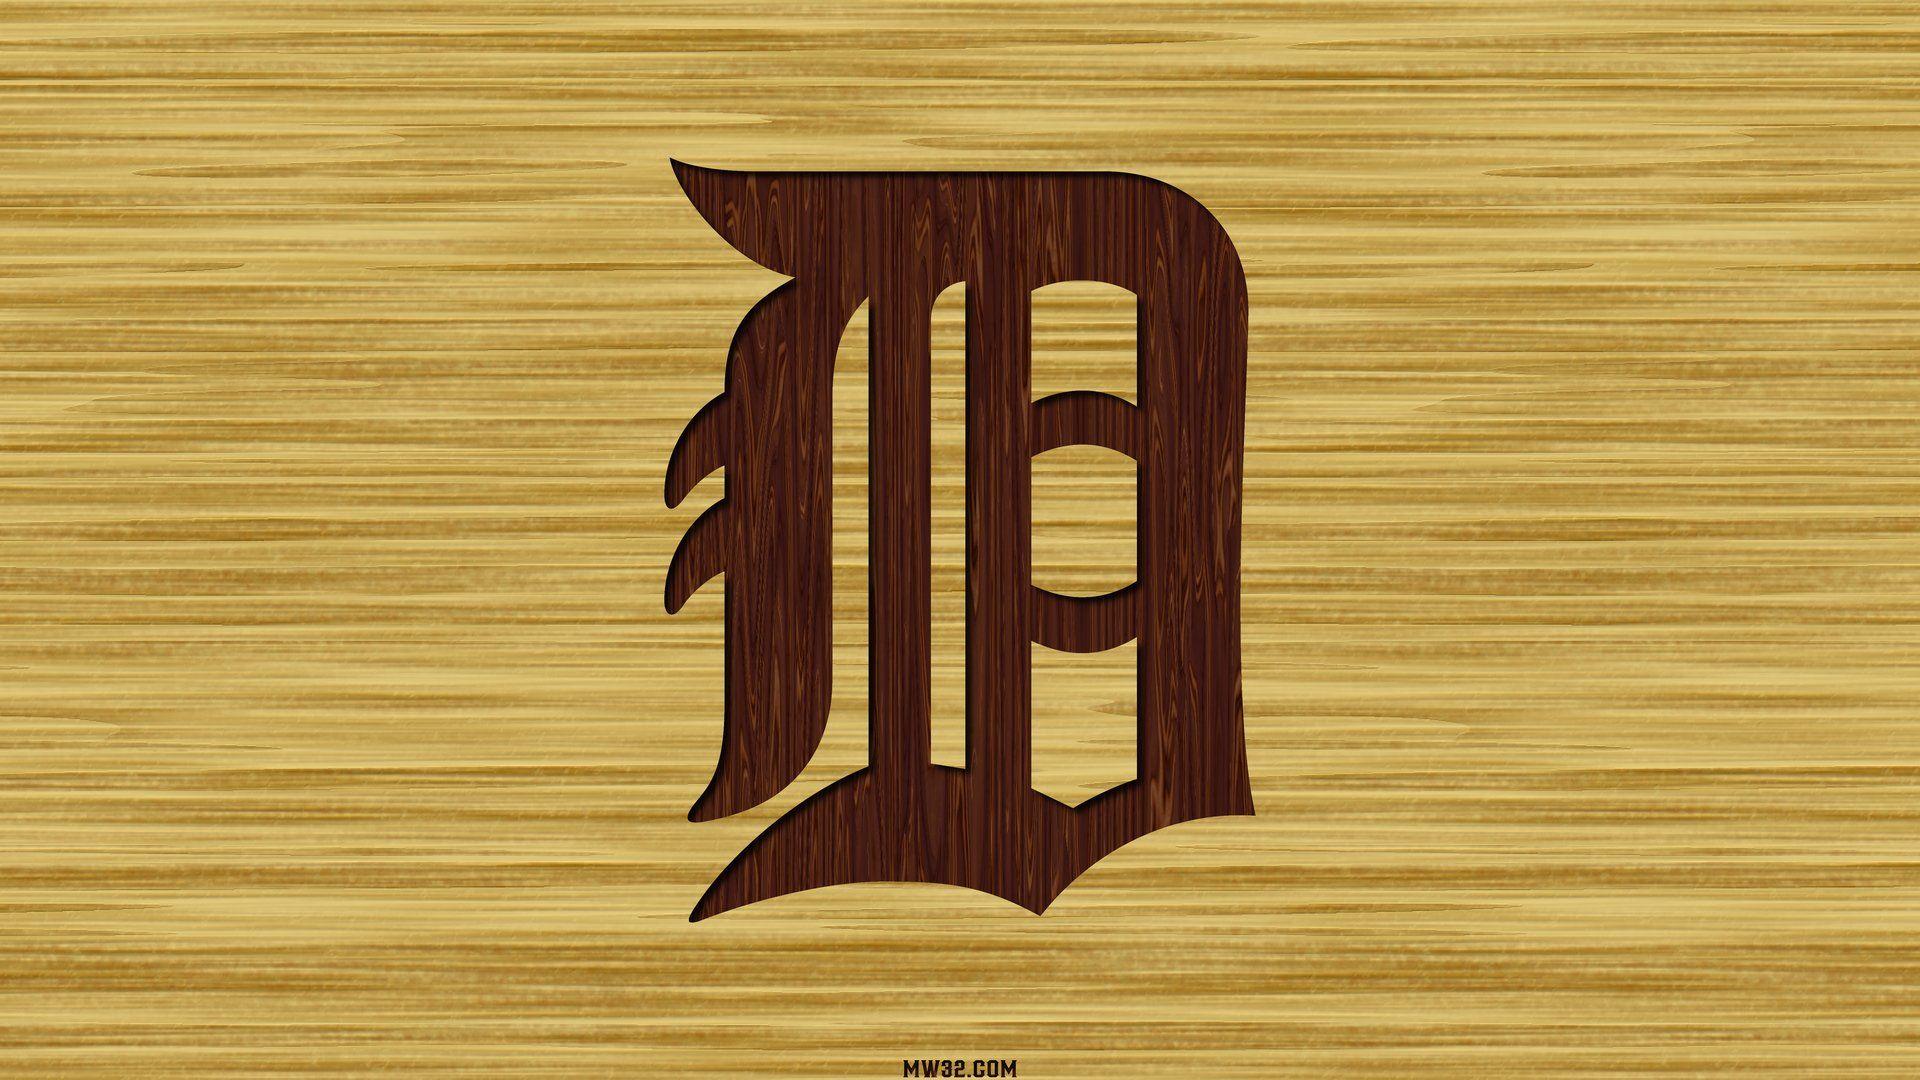 detroit tigers logo wallpaper Gallery